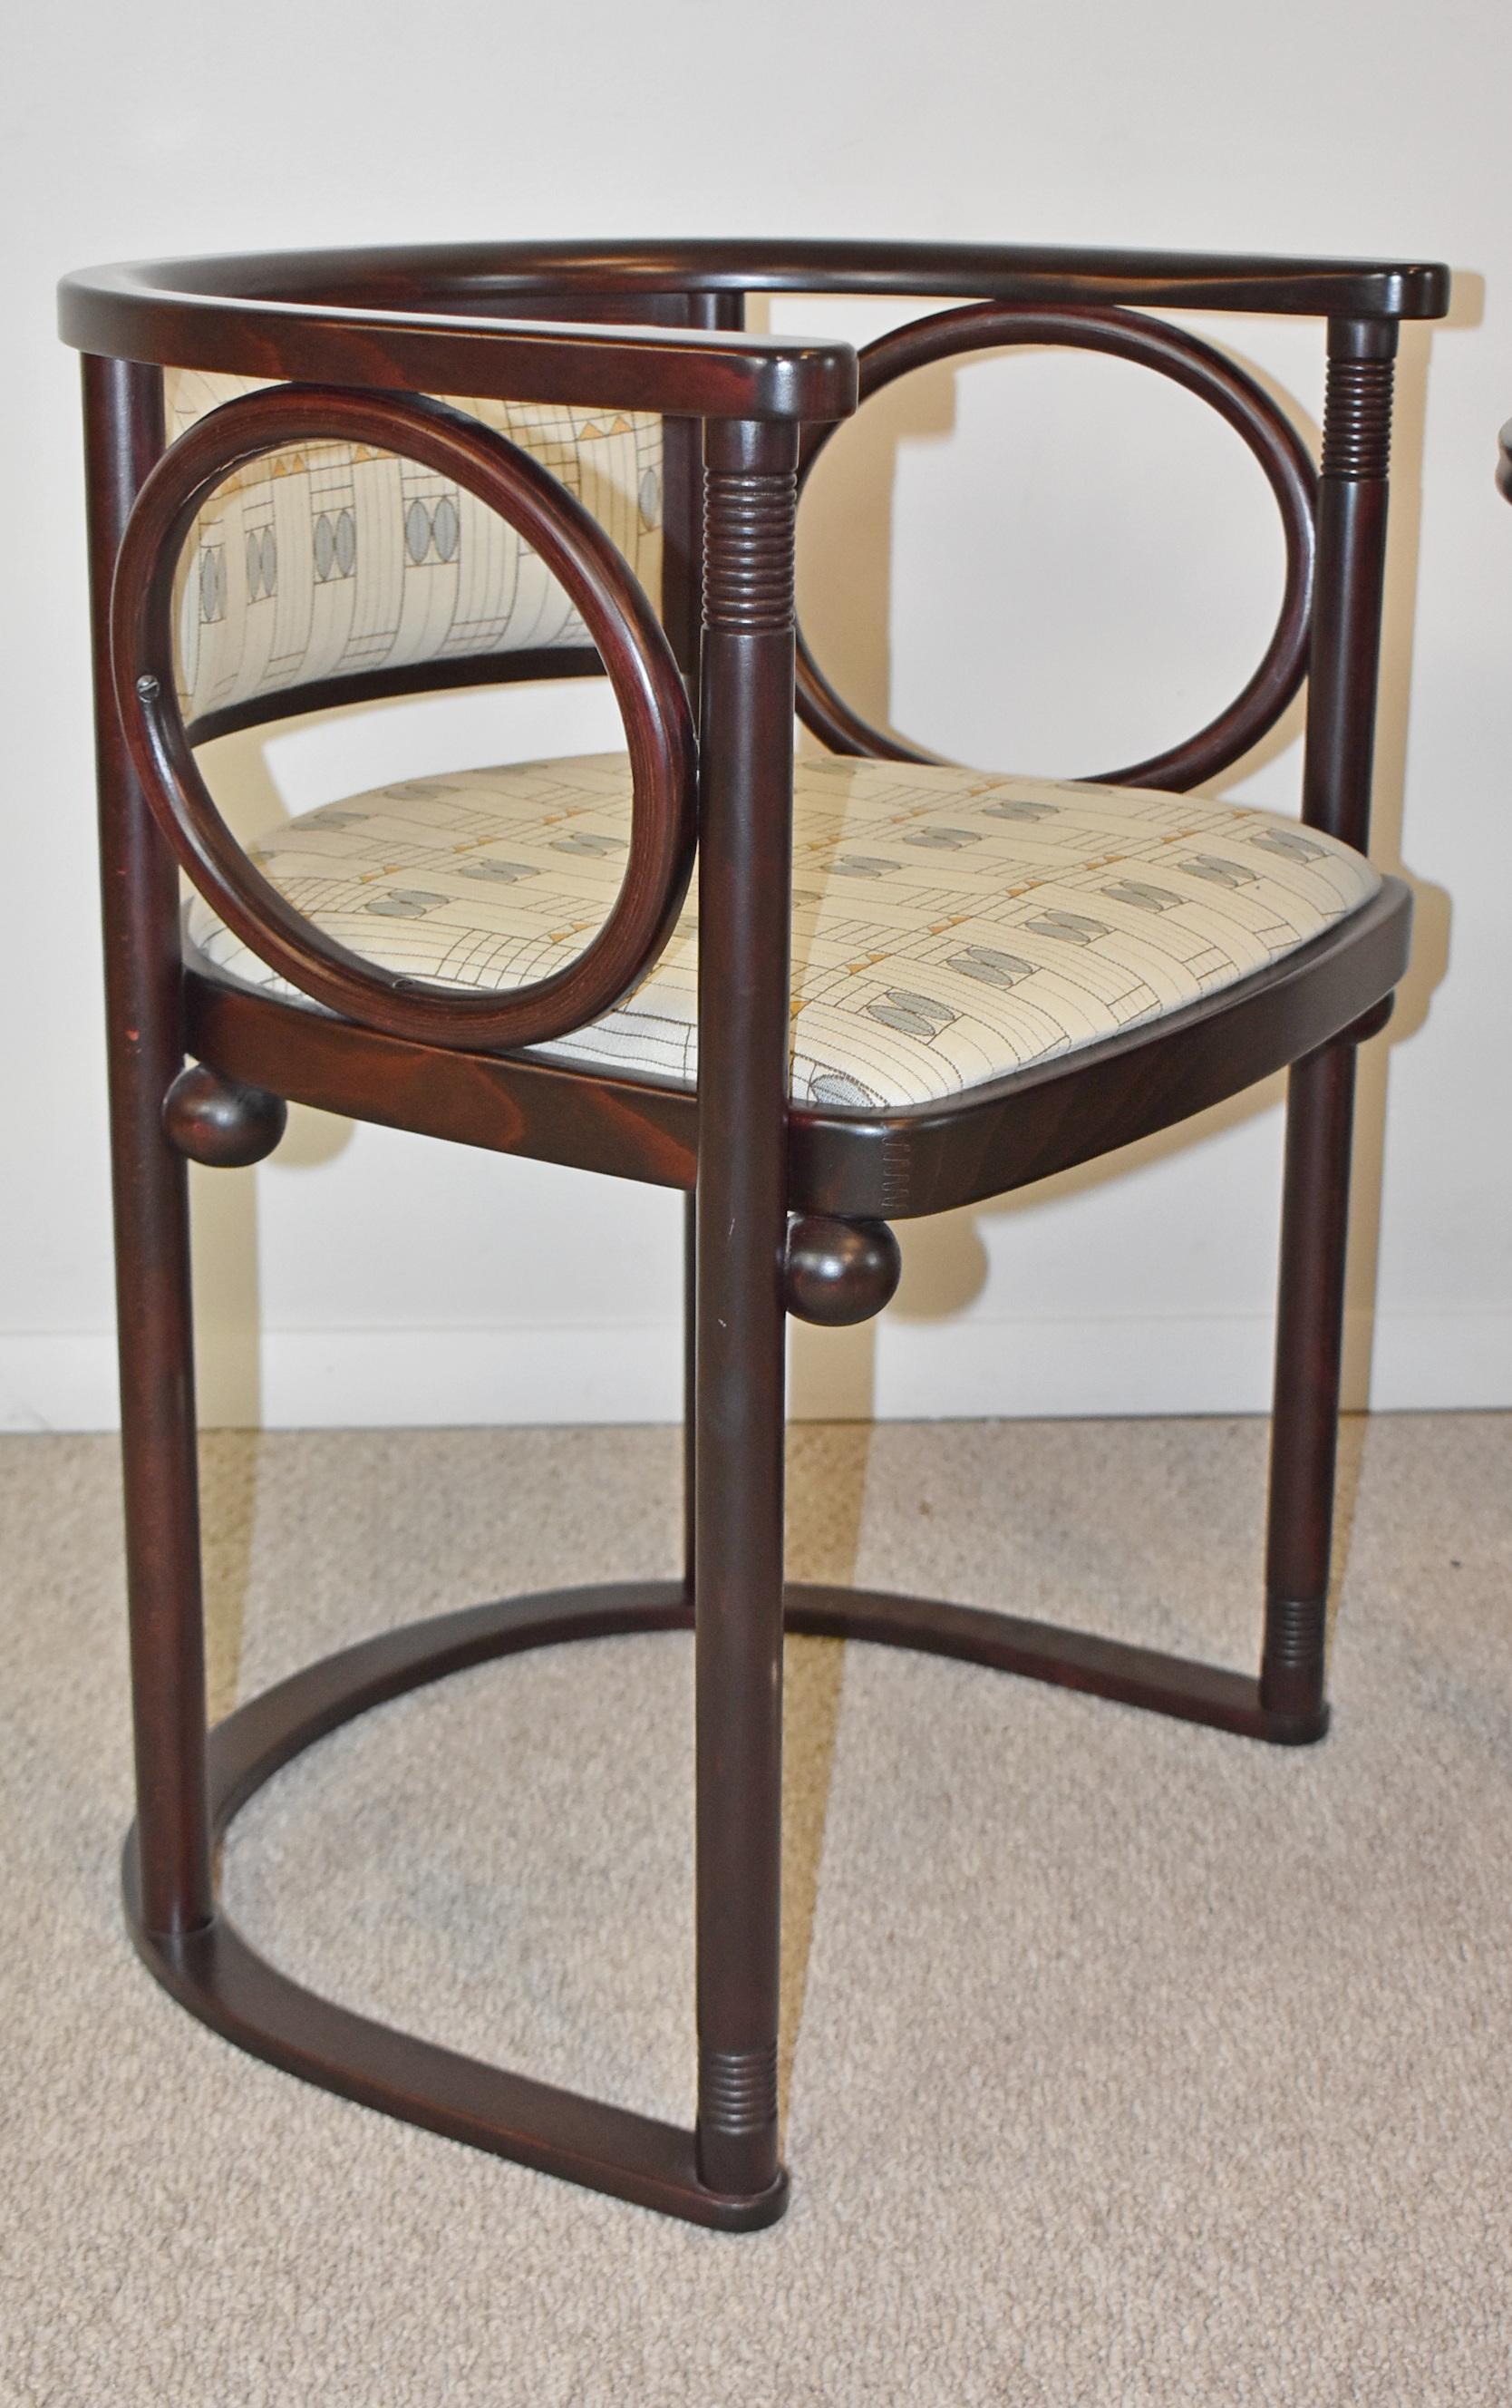 Austrian Josef Hoffmann Pedestal Fledermaus Table and 2 Chairs by Wittmann Art Deco Style